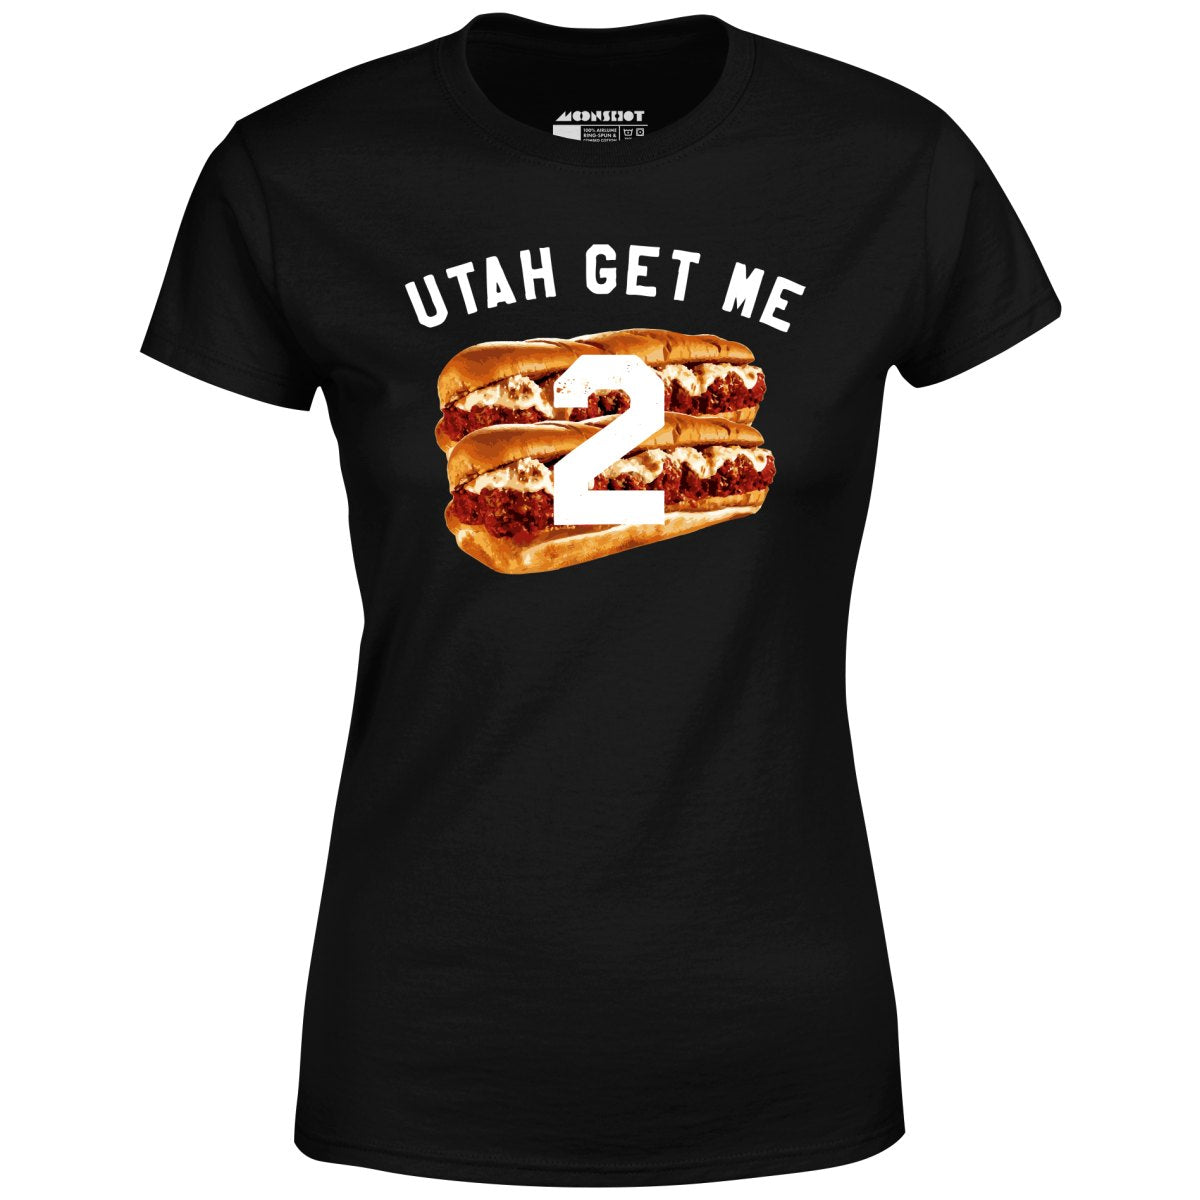 Utah Get Me Two - Meatball Subs - Women's T-Shirt